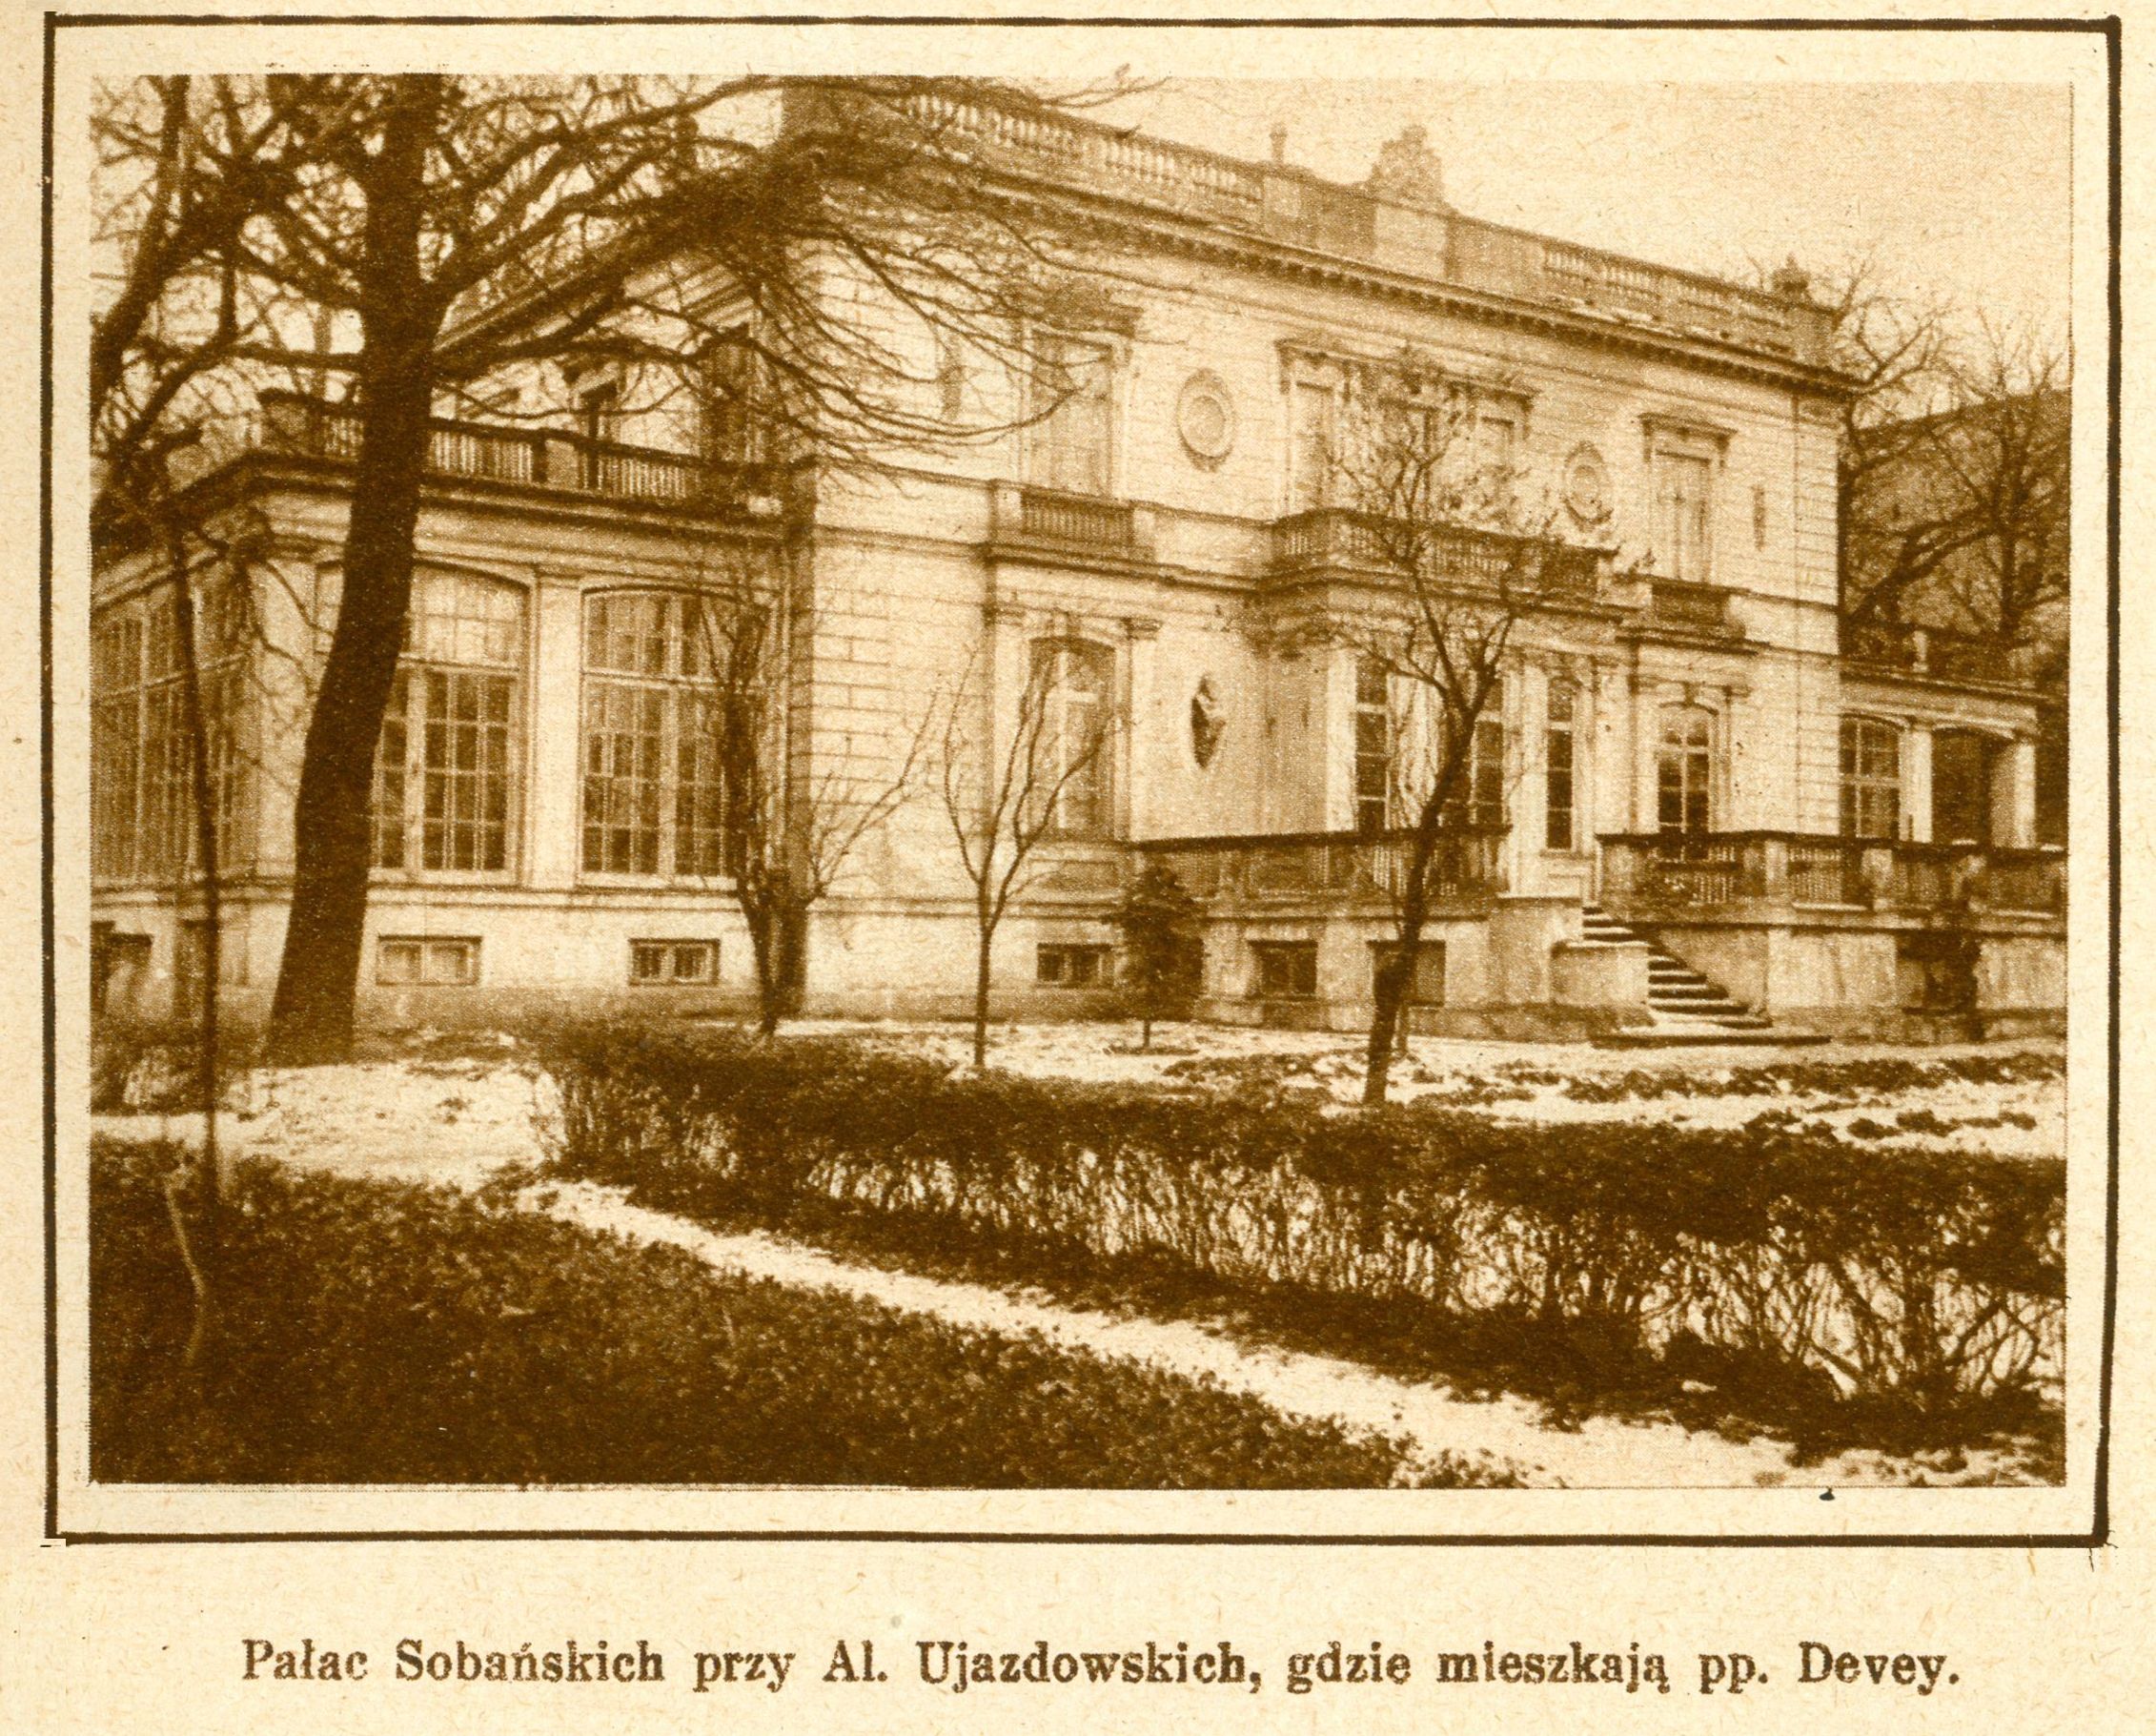 Swaitowid nr 51 17.12.1927 palac Sobanskich Warszawa 2